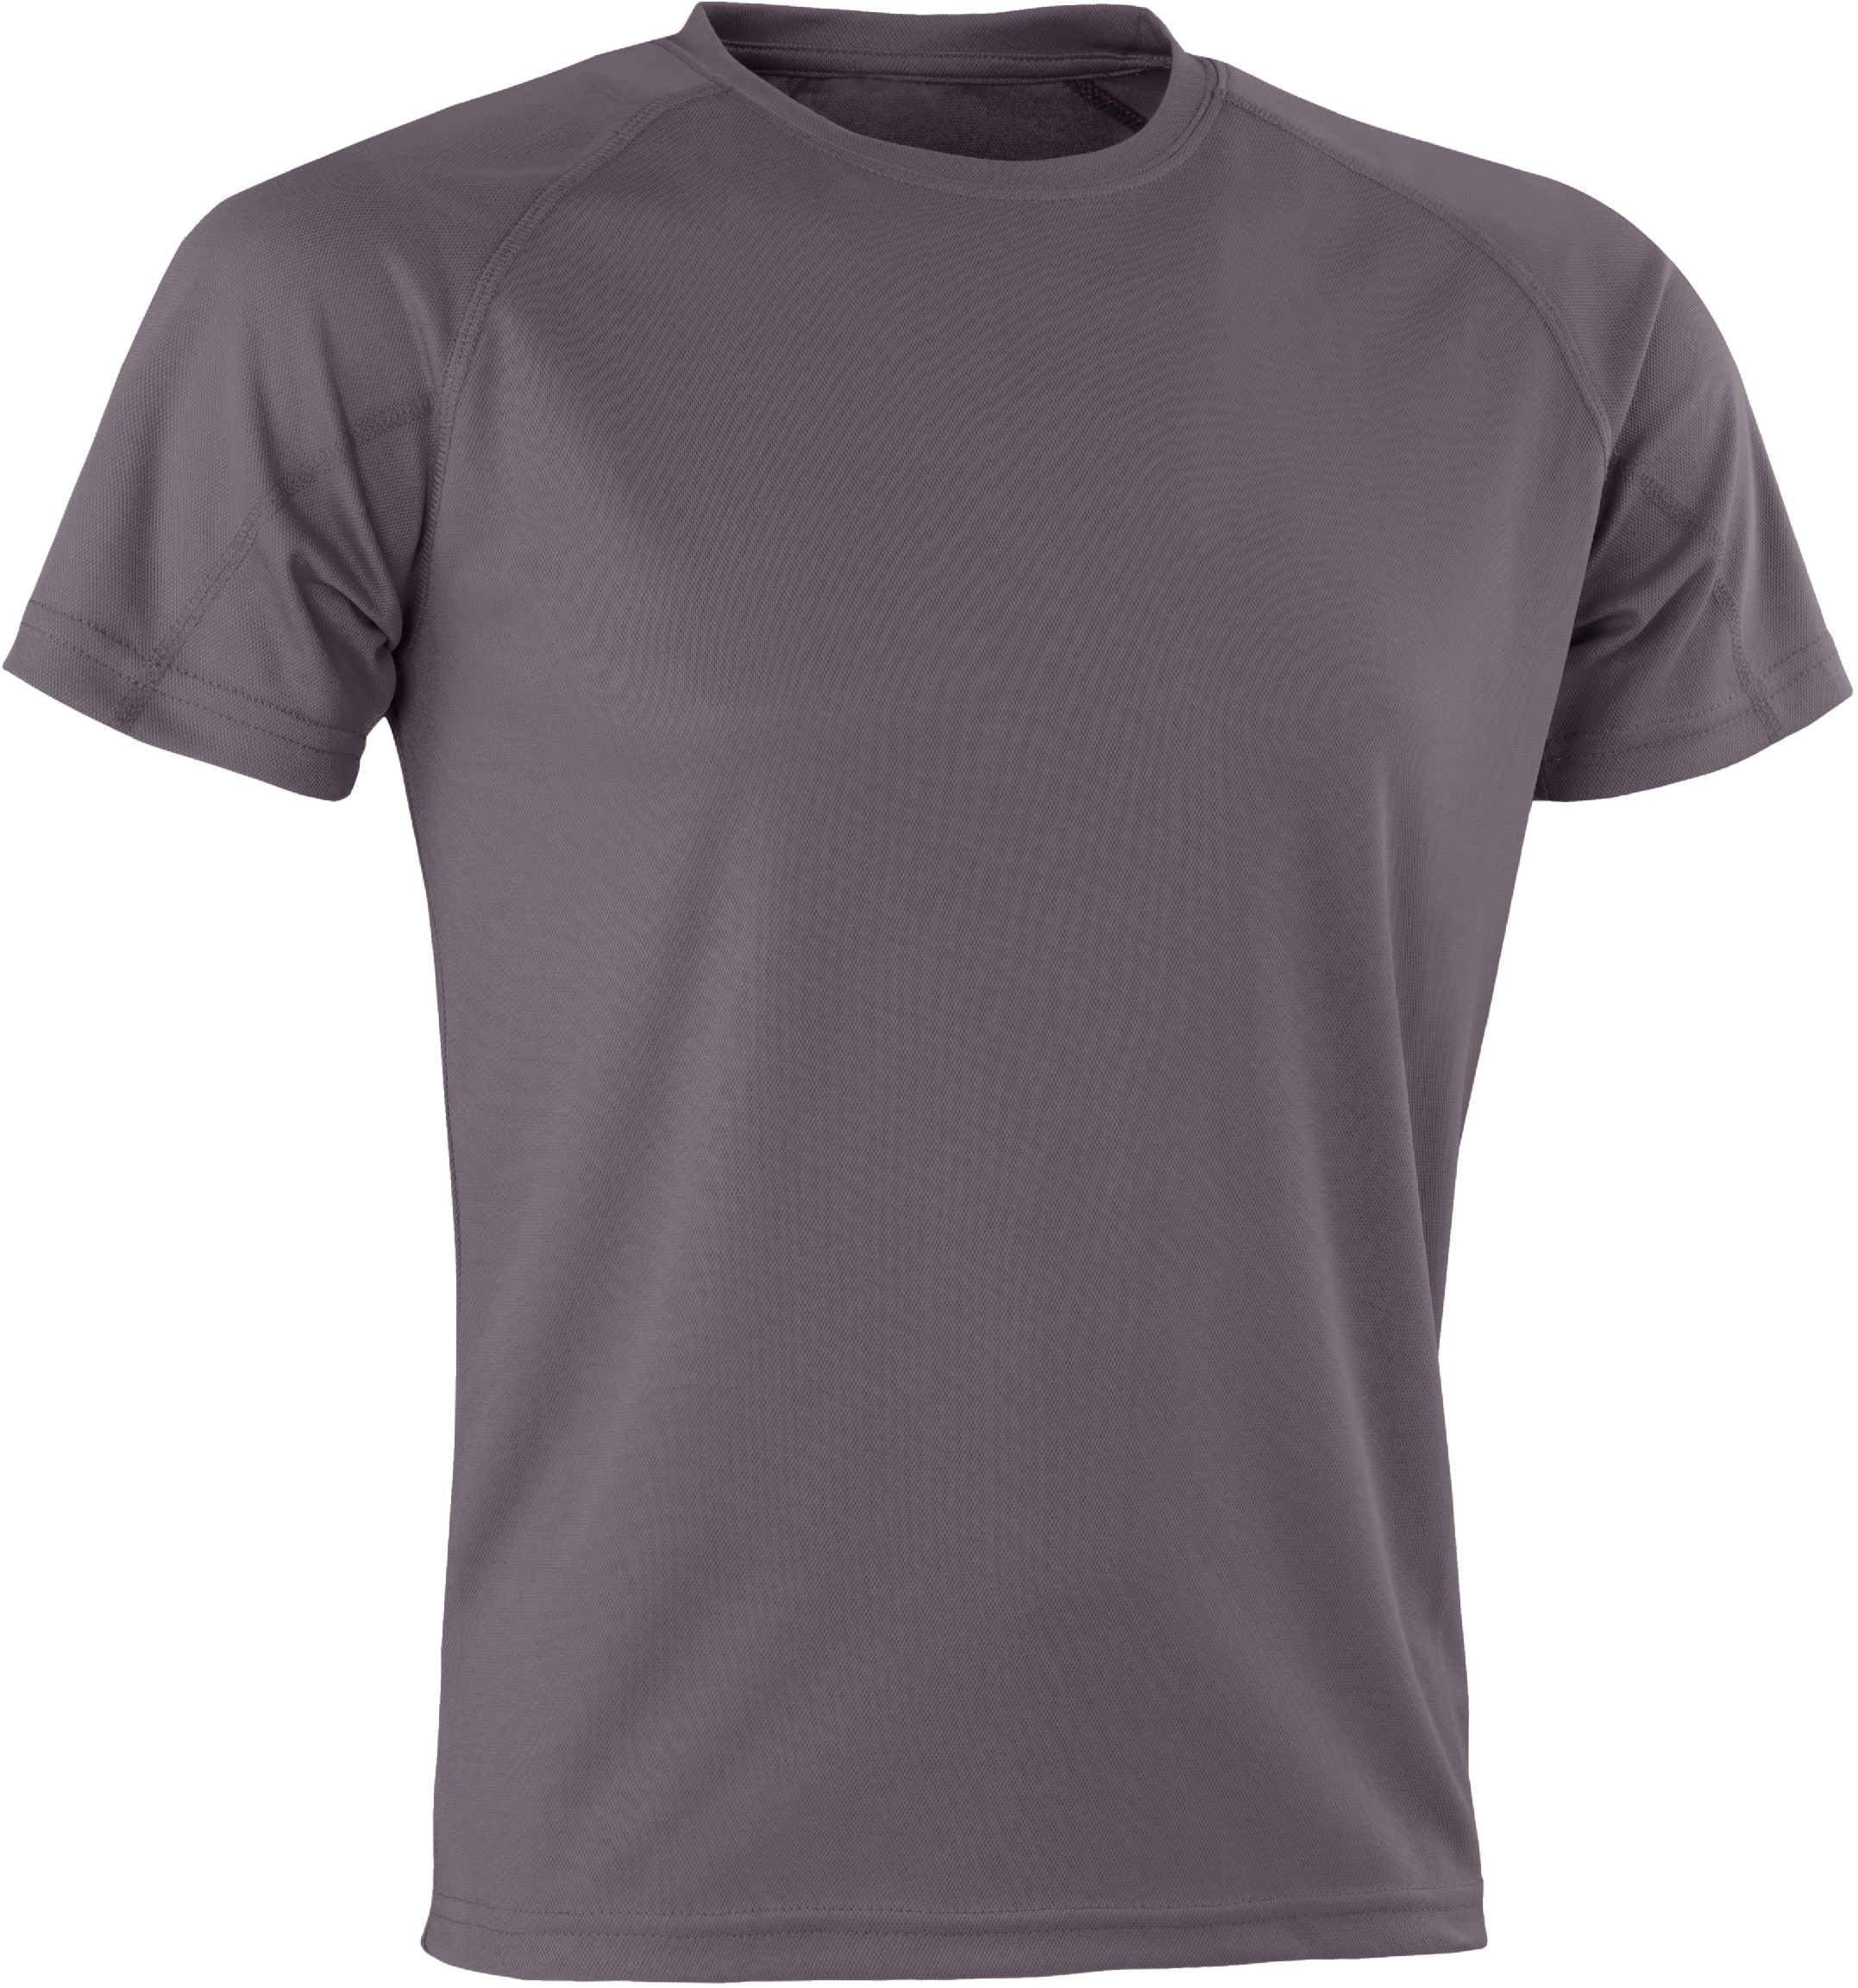 Sportovní tričko Aircool S287X Barva: šedá, Velikost: L